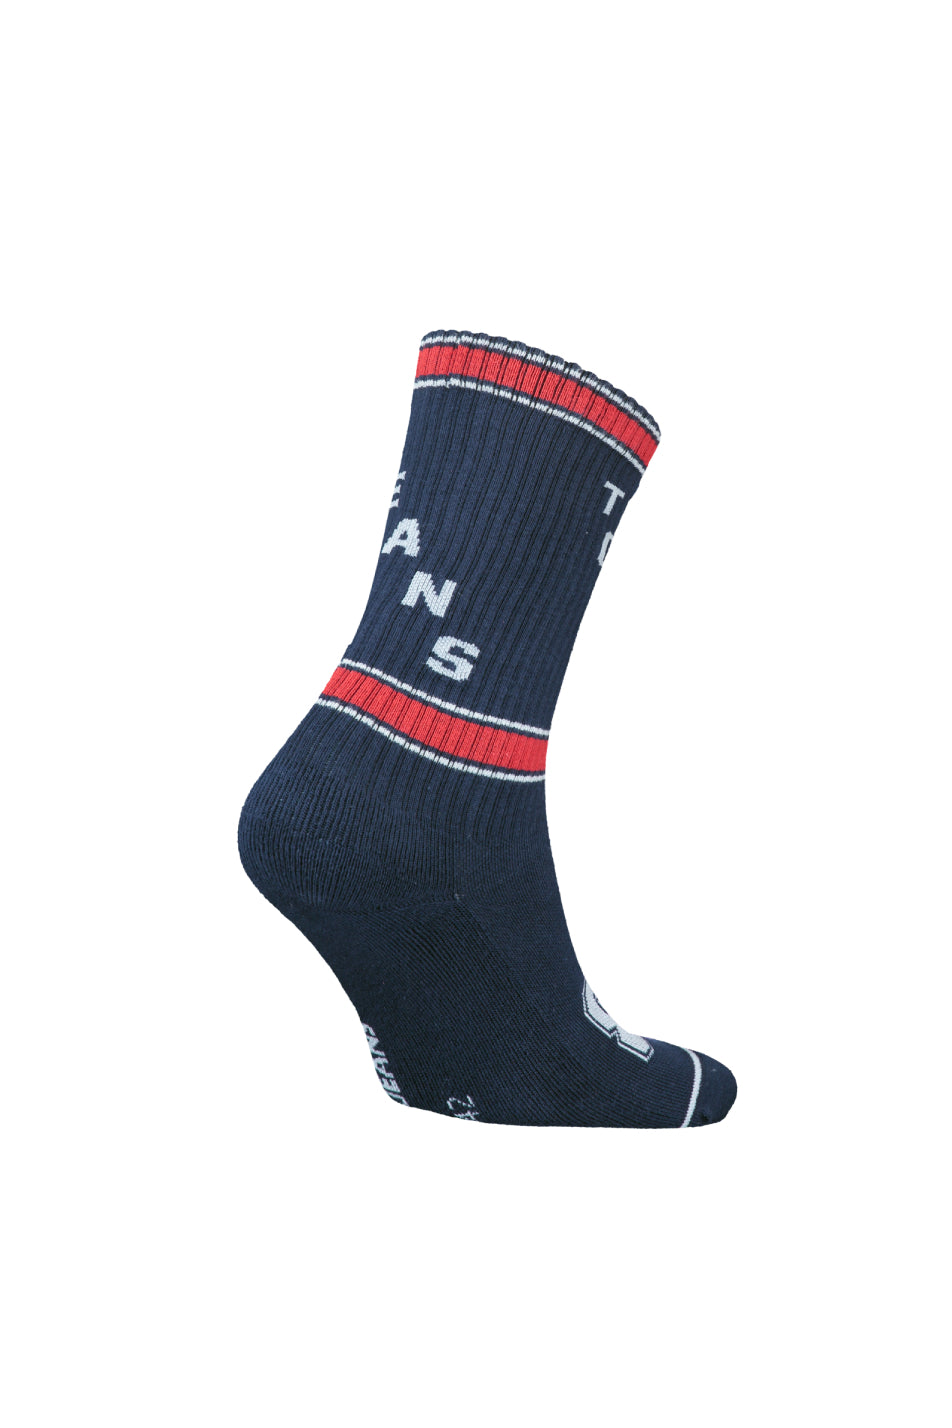 Tommy Hilfiger Men's Varsity Sock